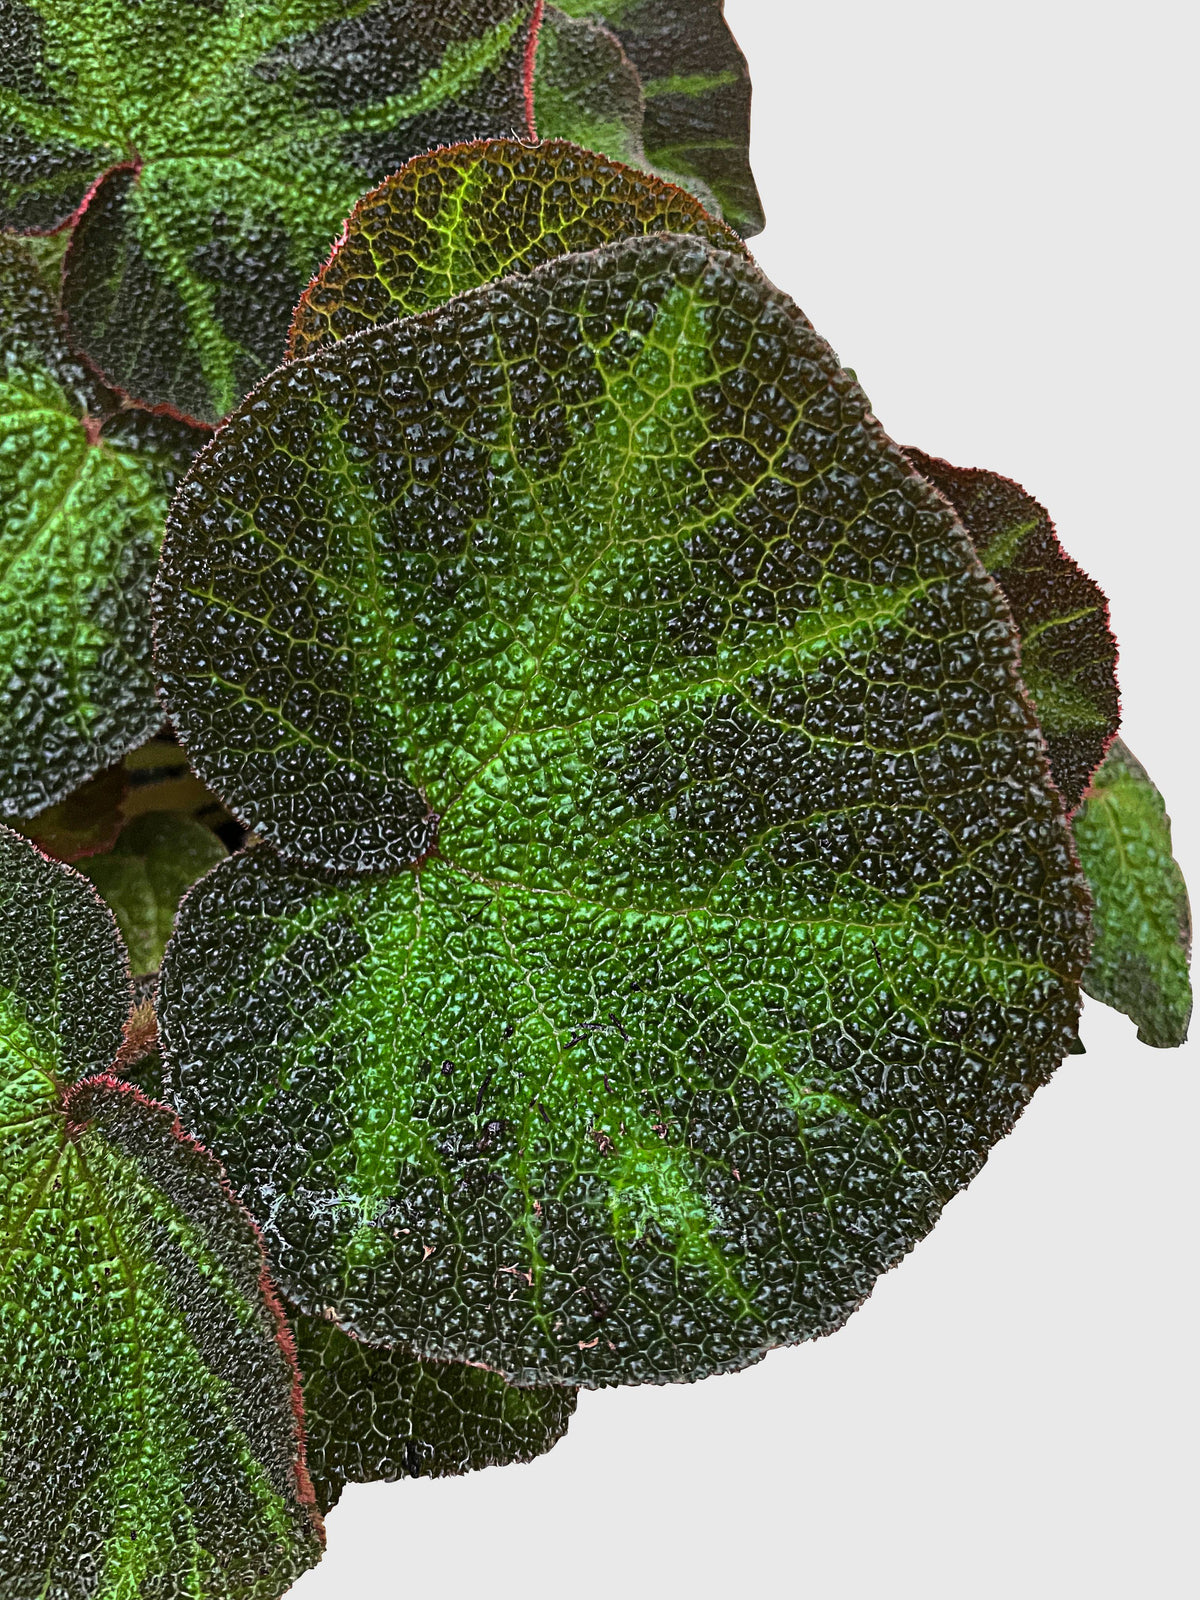 Begonia Soli-Mutata (Sun-Changing Begonia) by Bumble Plants